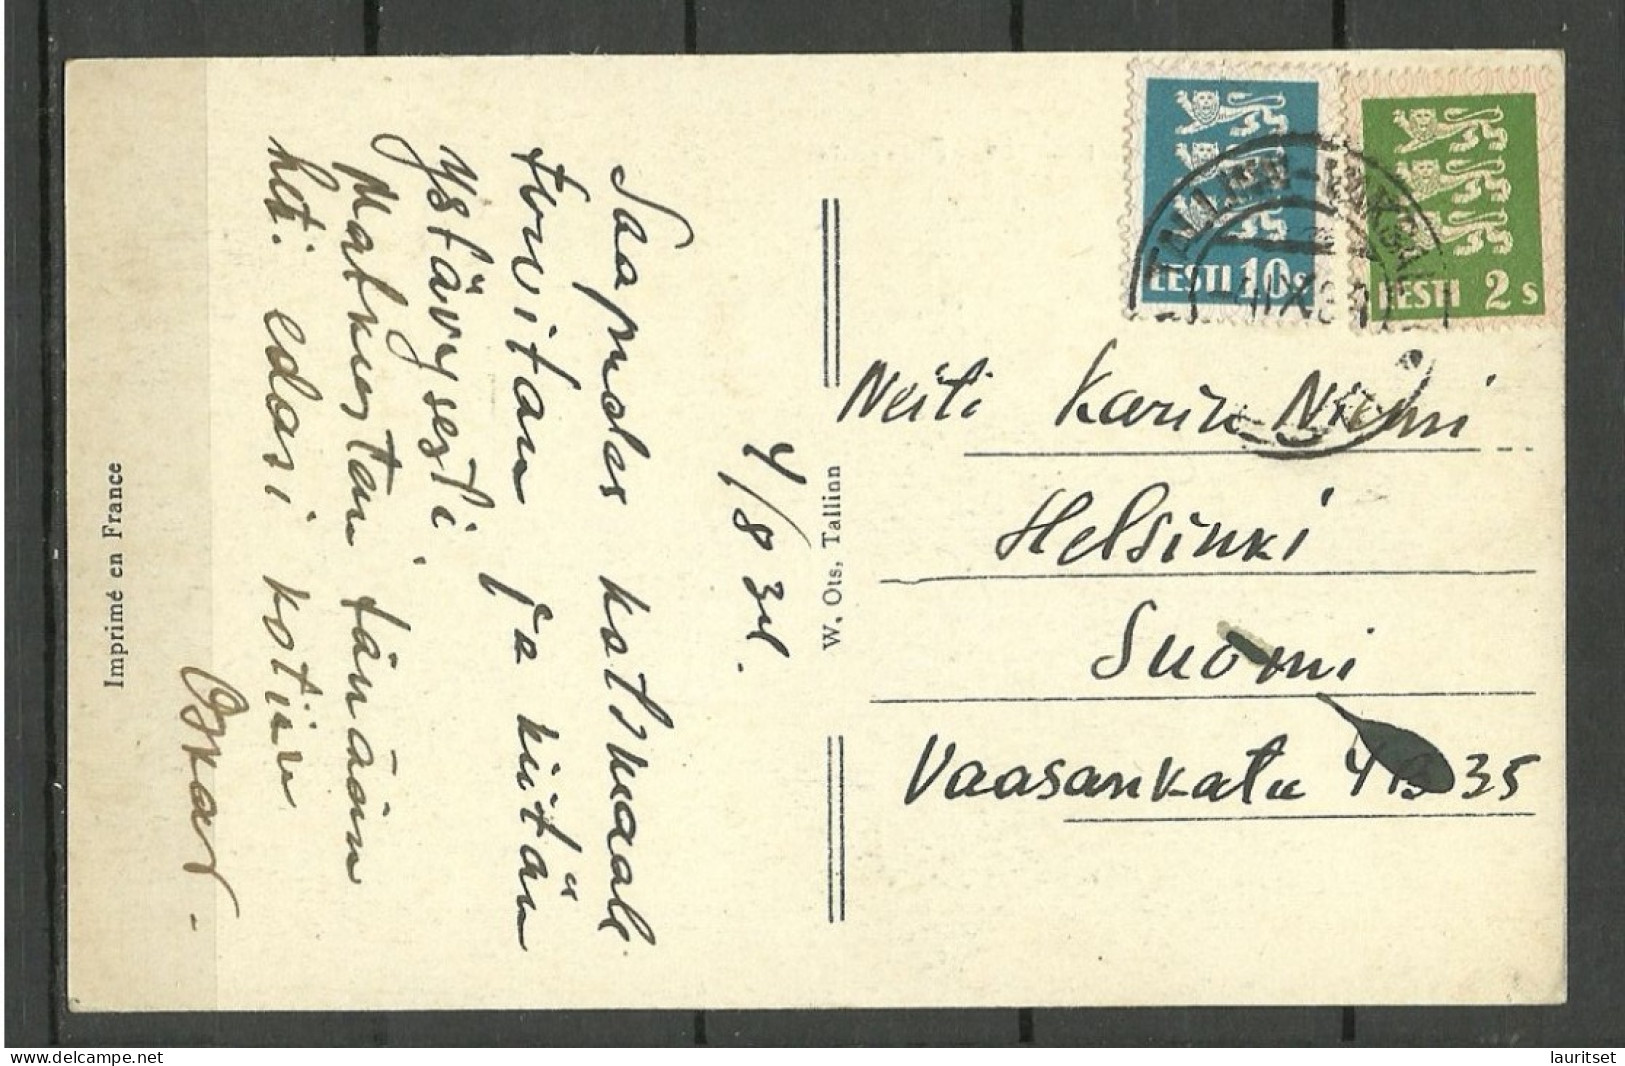 ESTONIA Estland 1934 Tallinn Post Card Sent To Finland - Estonia